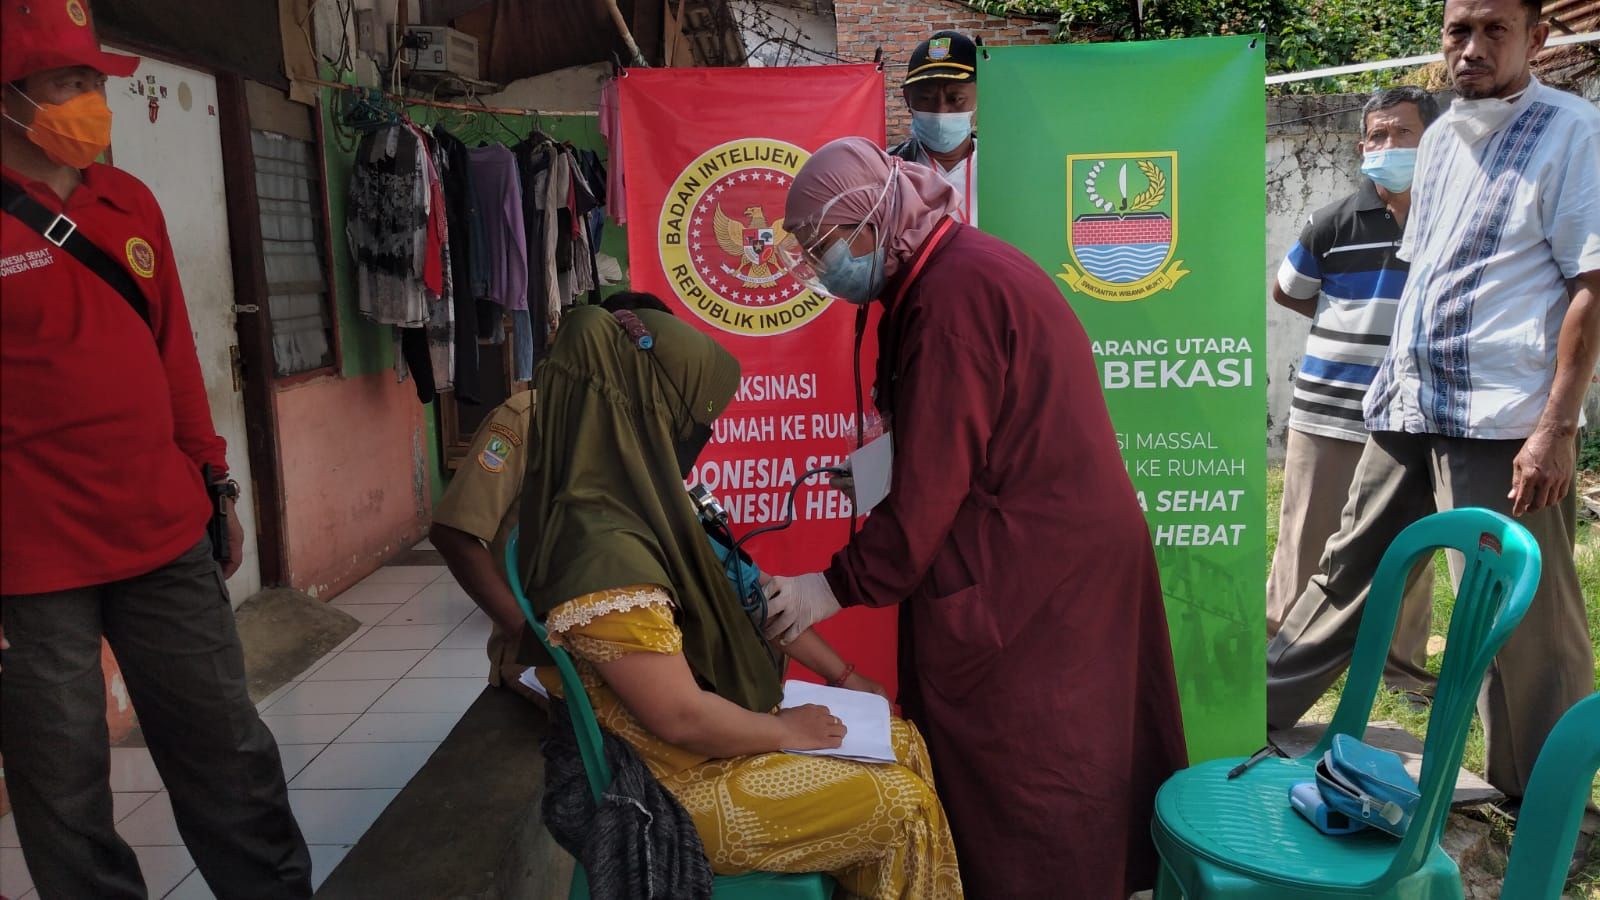 Badan Intelijen Negara (BIN) menggelar vaksinasi Covid-19 untuk masyarakat Bekasi, Minggu, 1 Agustus 2021. Selain itu, BIN juga menebar bantuan sebanyak 2.500 paket sembako./dok.BIN